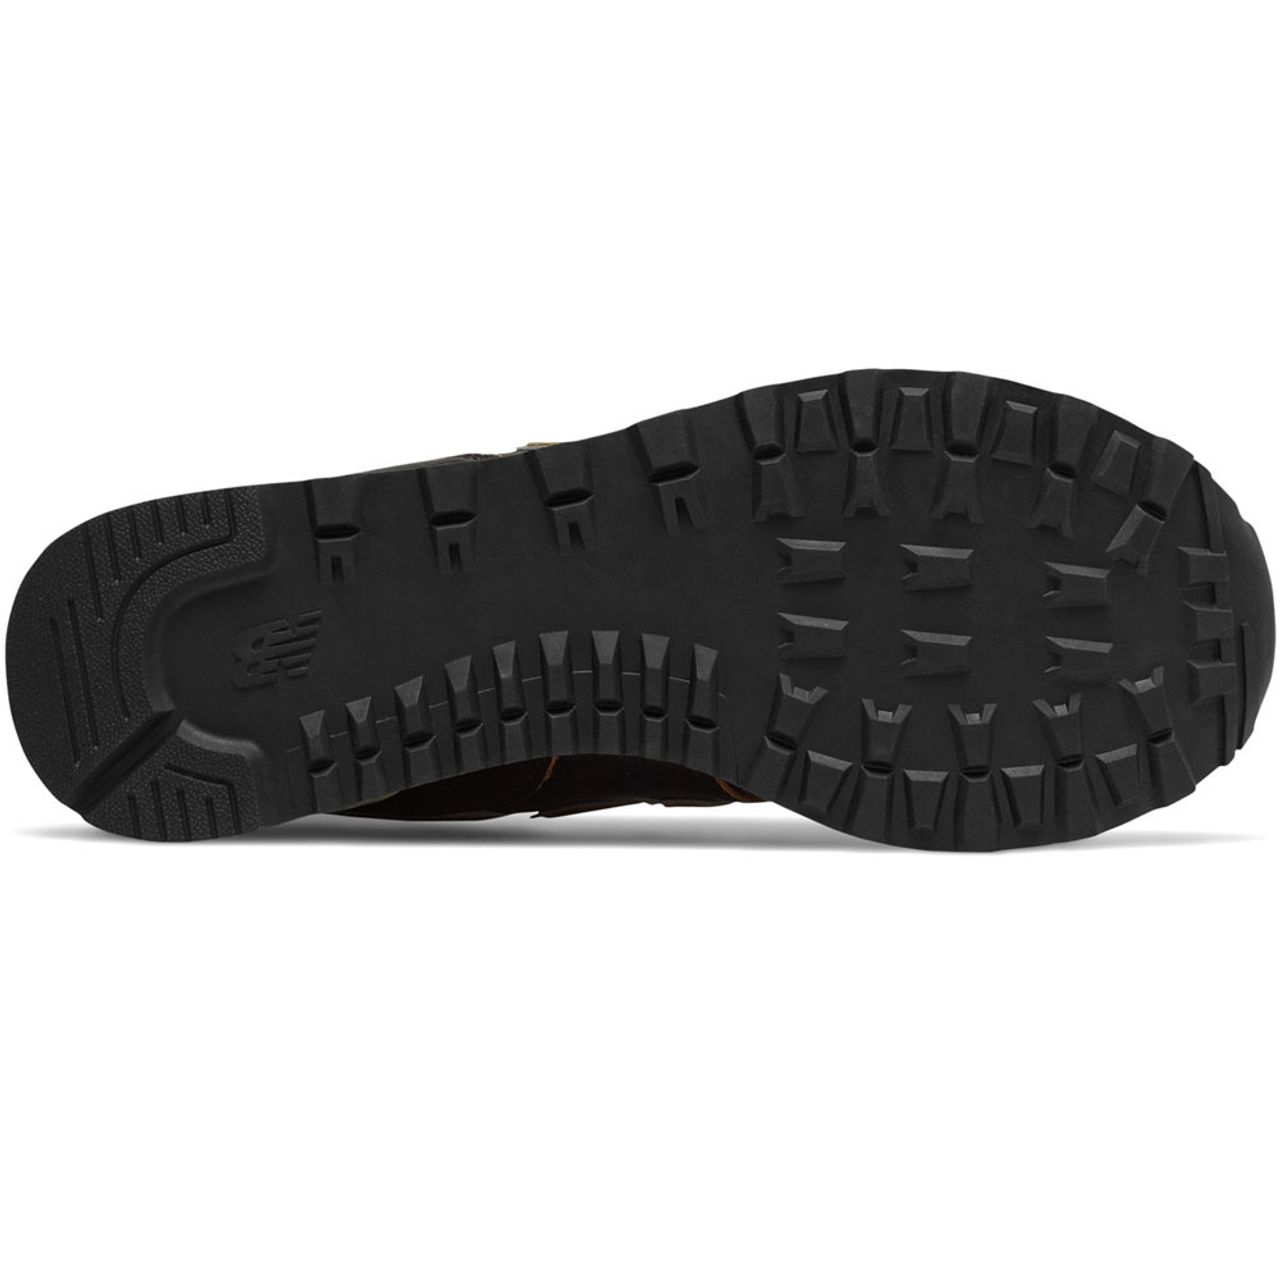 New Balance 574 Leather Herren-Sneaker Black